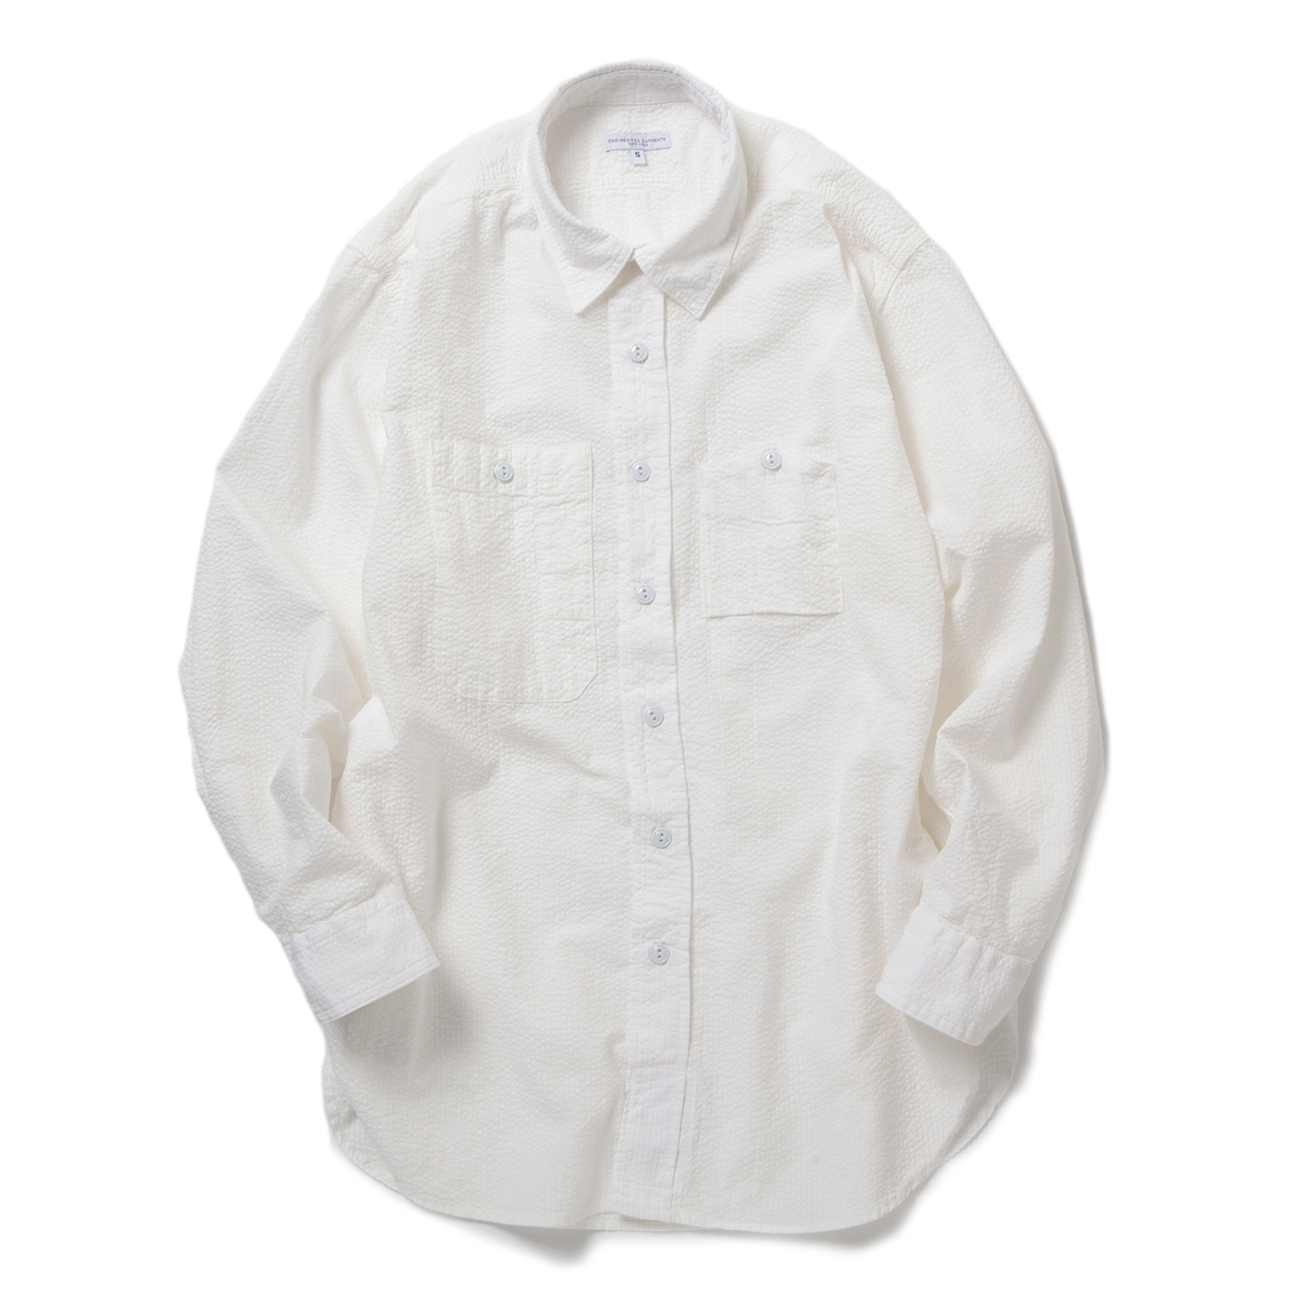 Work Shirt - Tone & Tone Seersucker - White